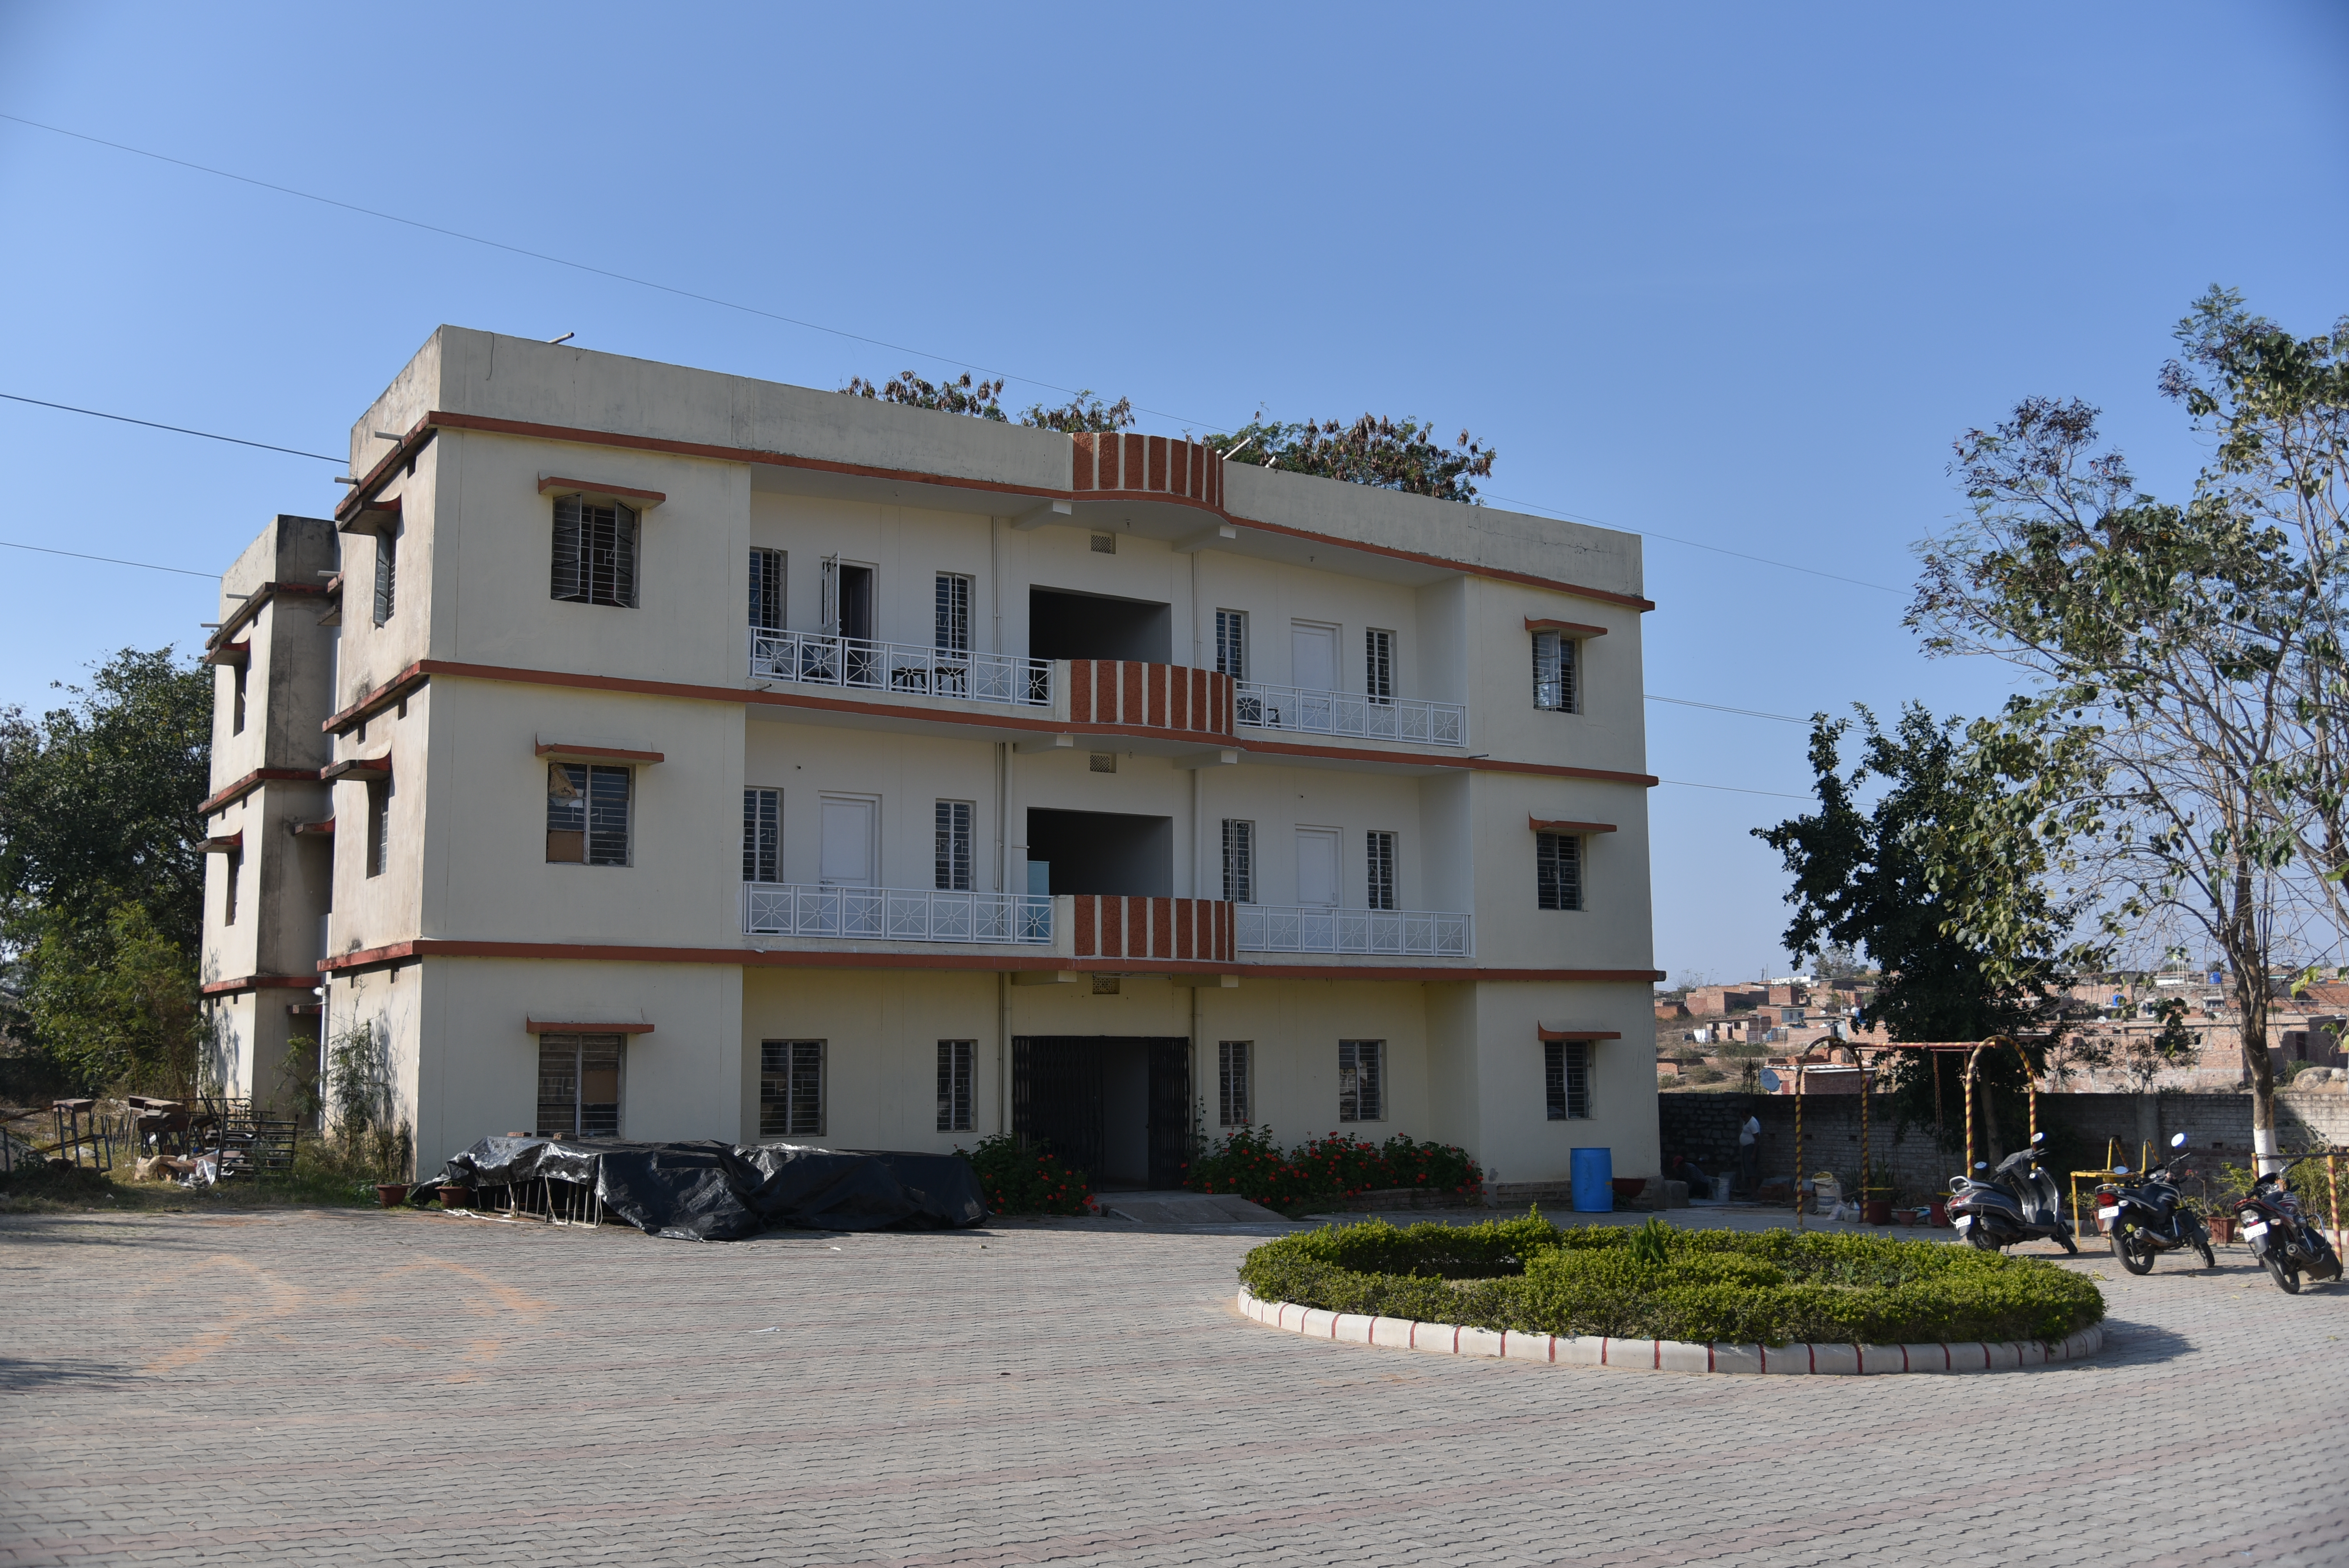 RKDF University Hostel